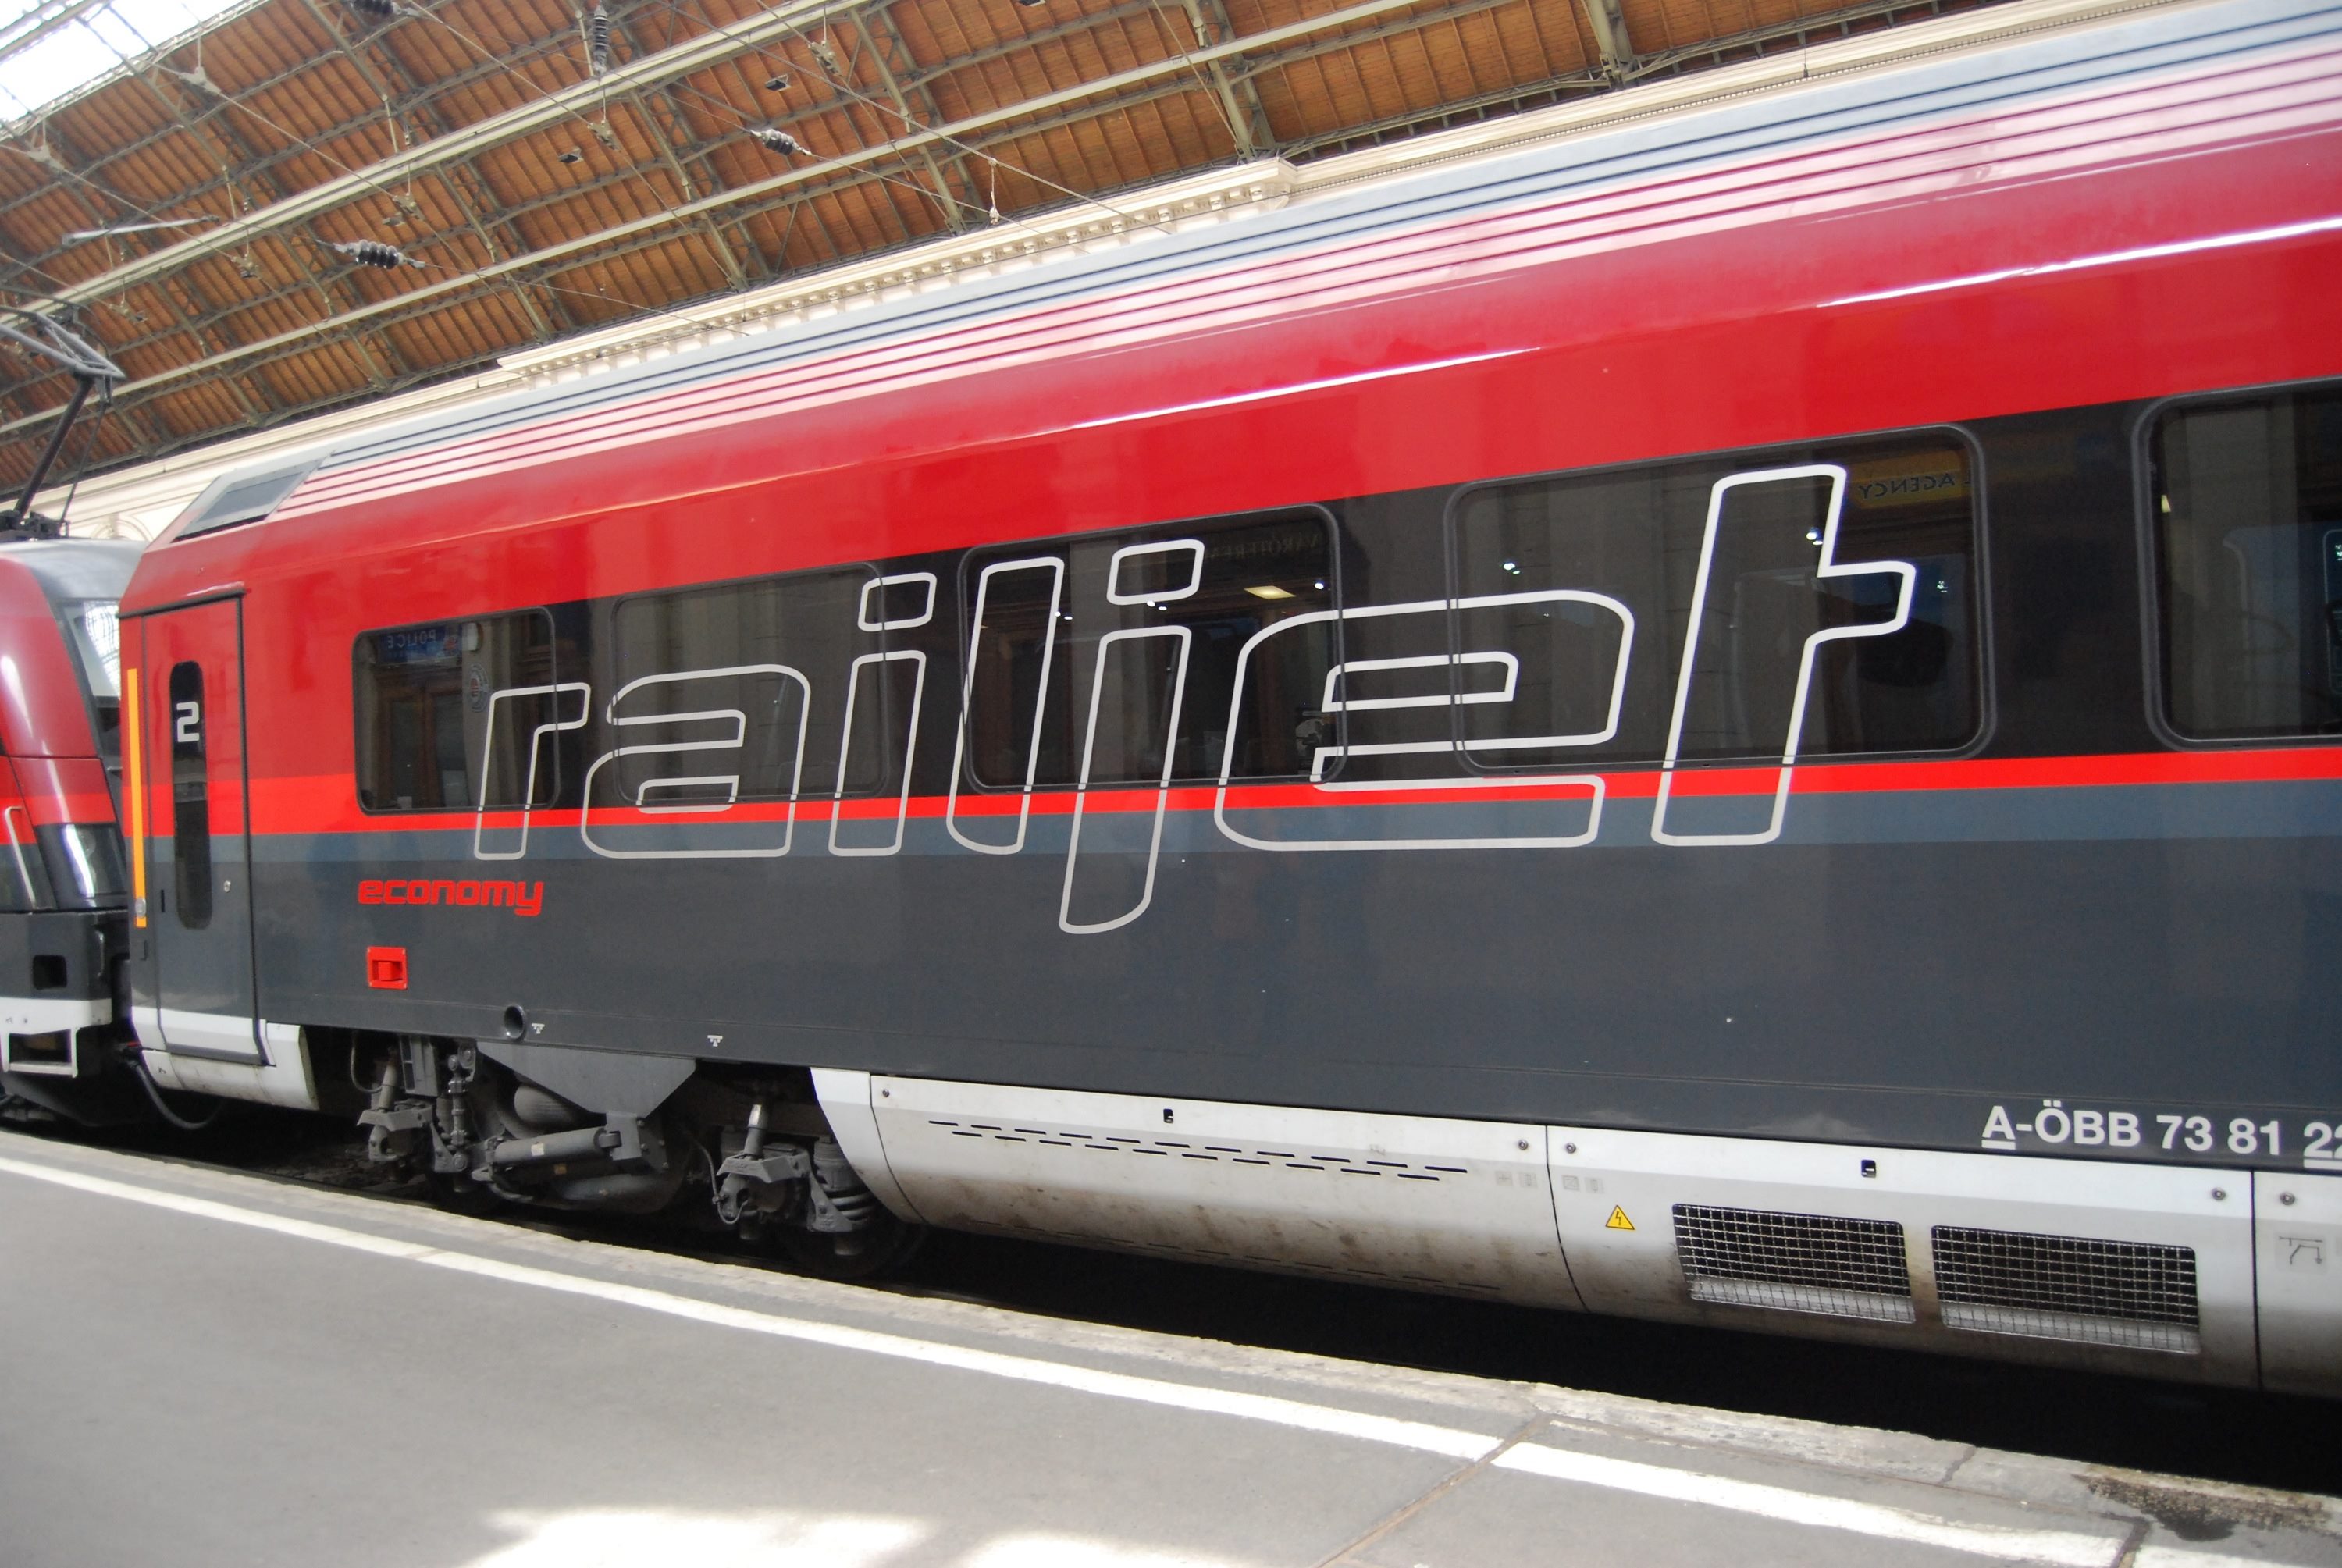 RailJet Budapest-Keleti Budapest-Keleti